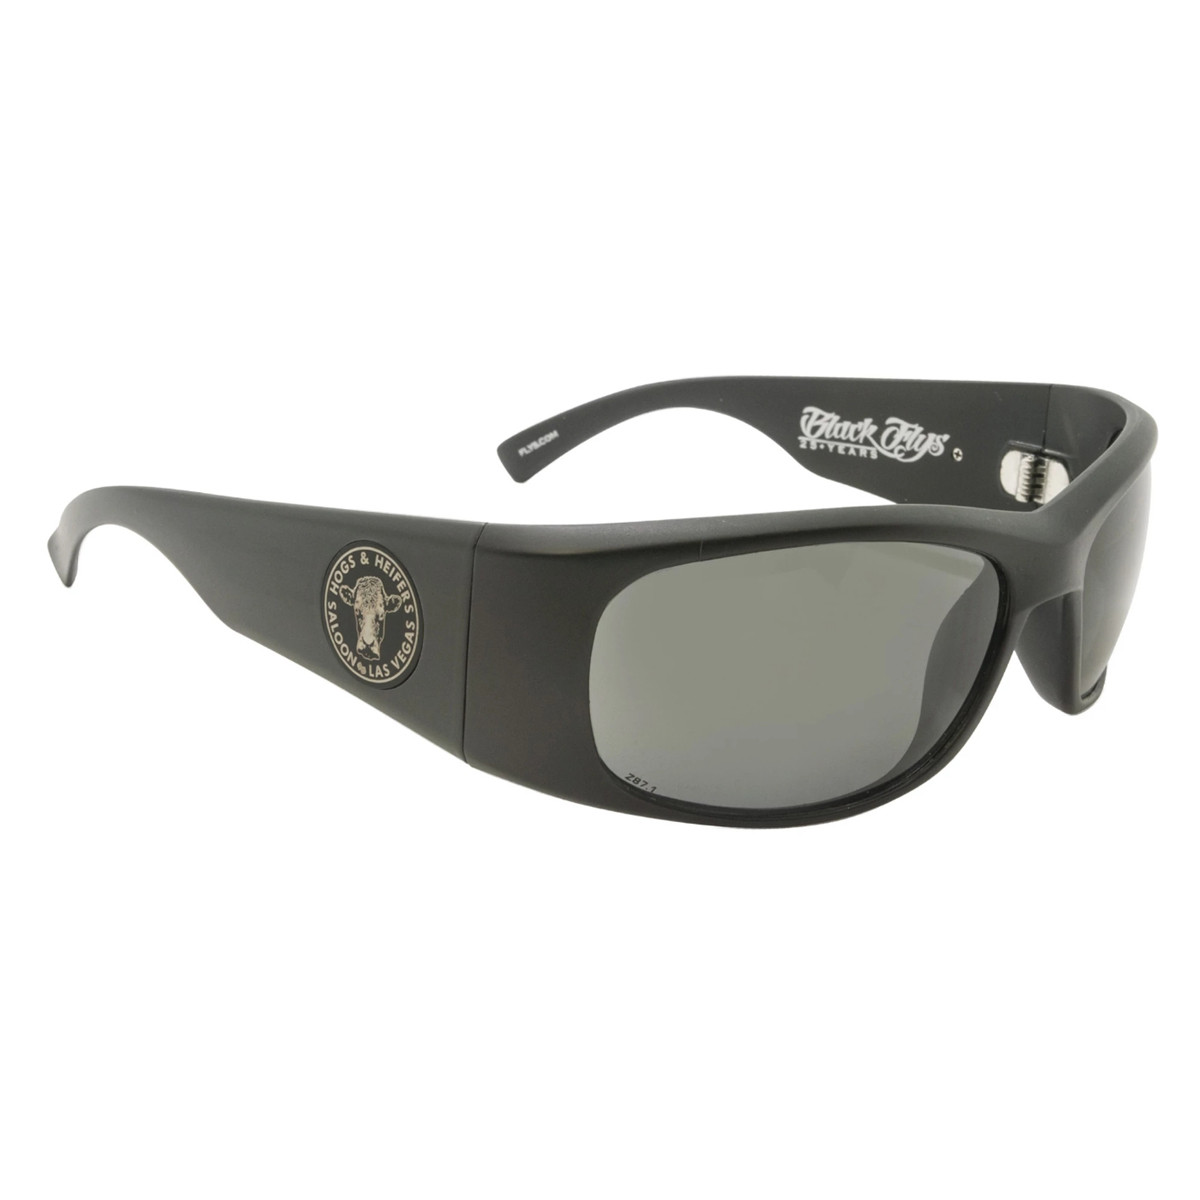 Black Flys Fly Ballistics Sunglasses - Hogs and Heifers Limited Edition ...